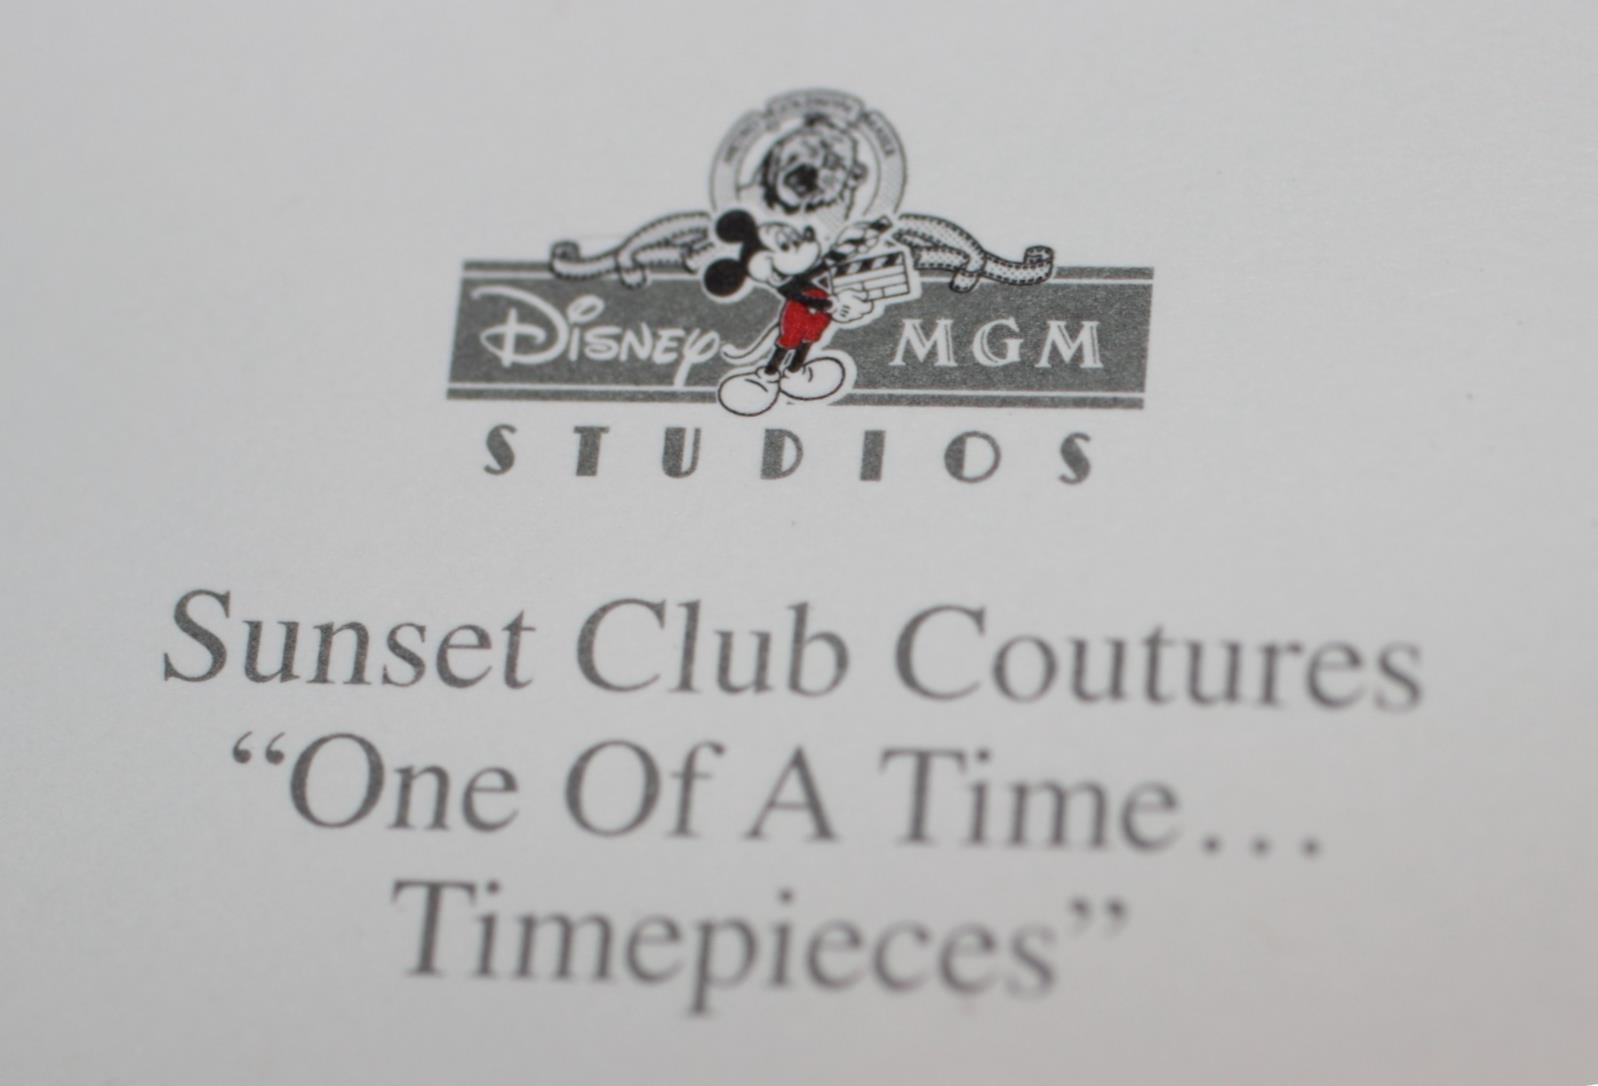 Walt Disney World Disney MGM Studios BUSINESS CARD 2001 Sunset Club Couture WDW